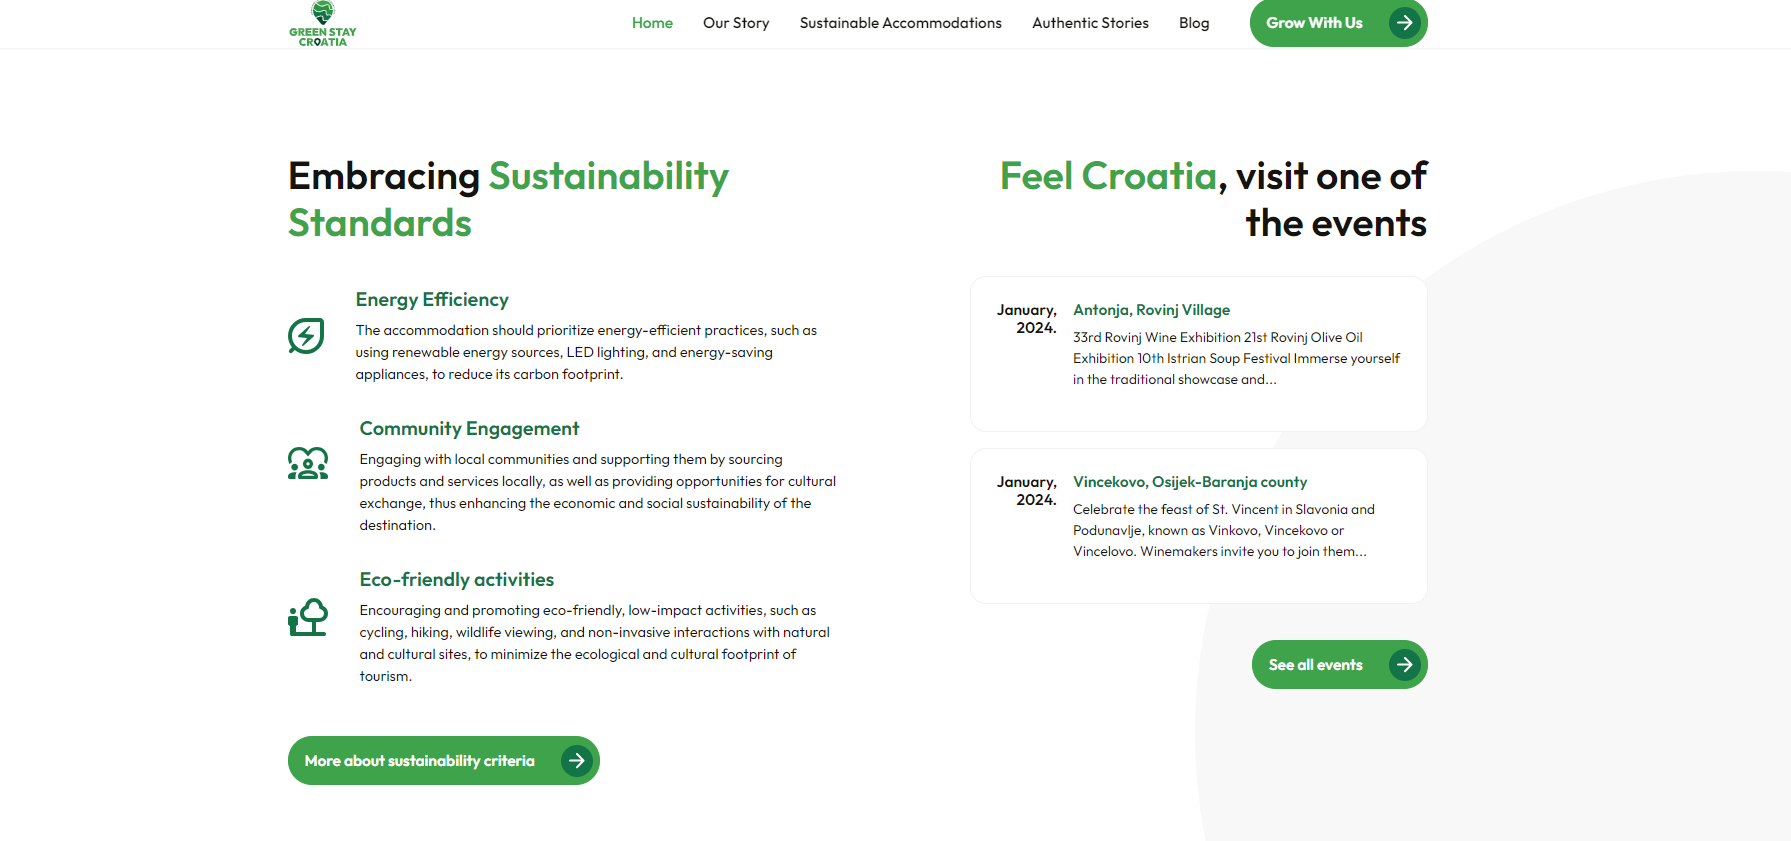 Green Stay Croatia platform launches